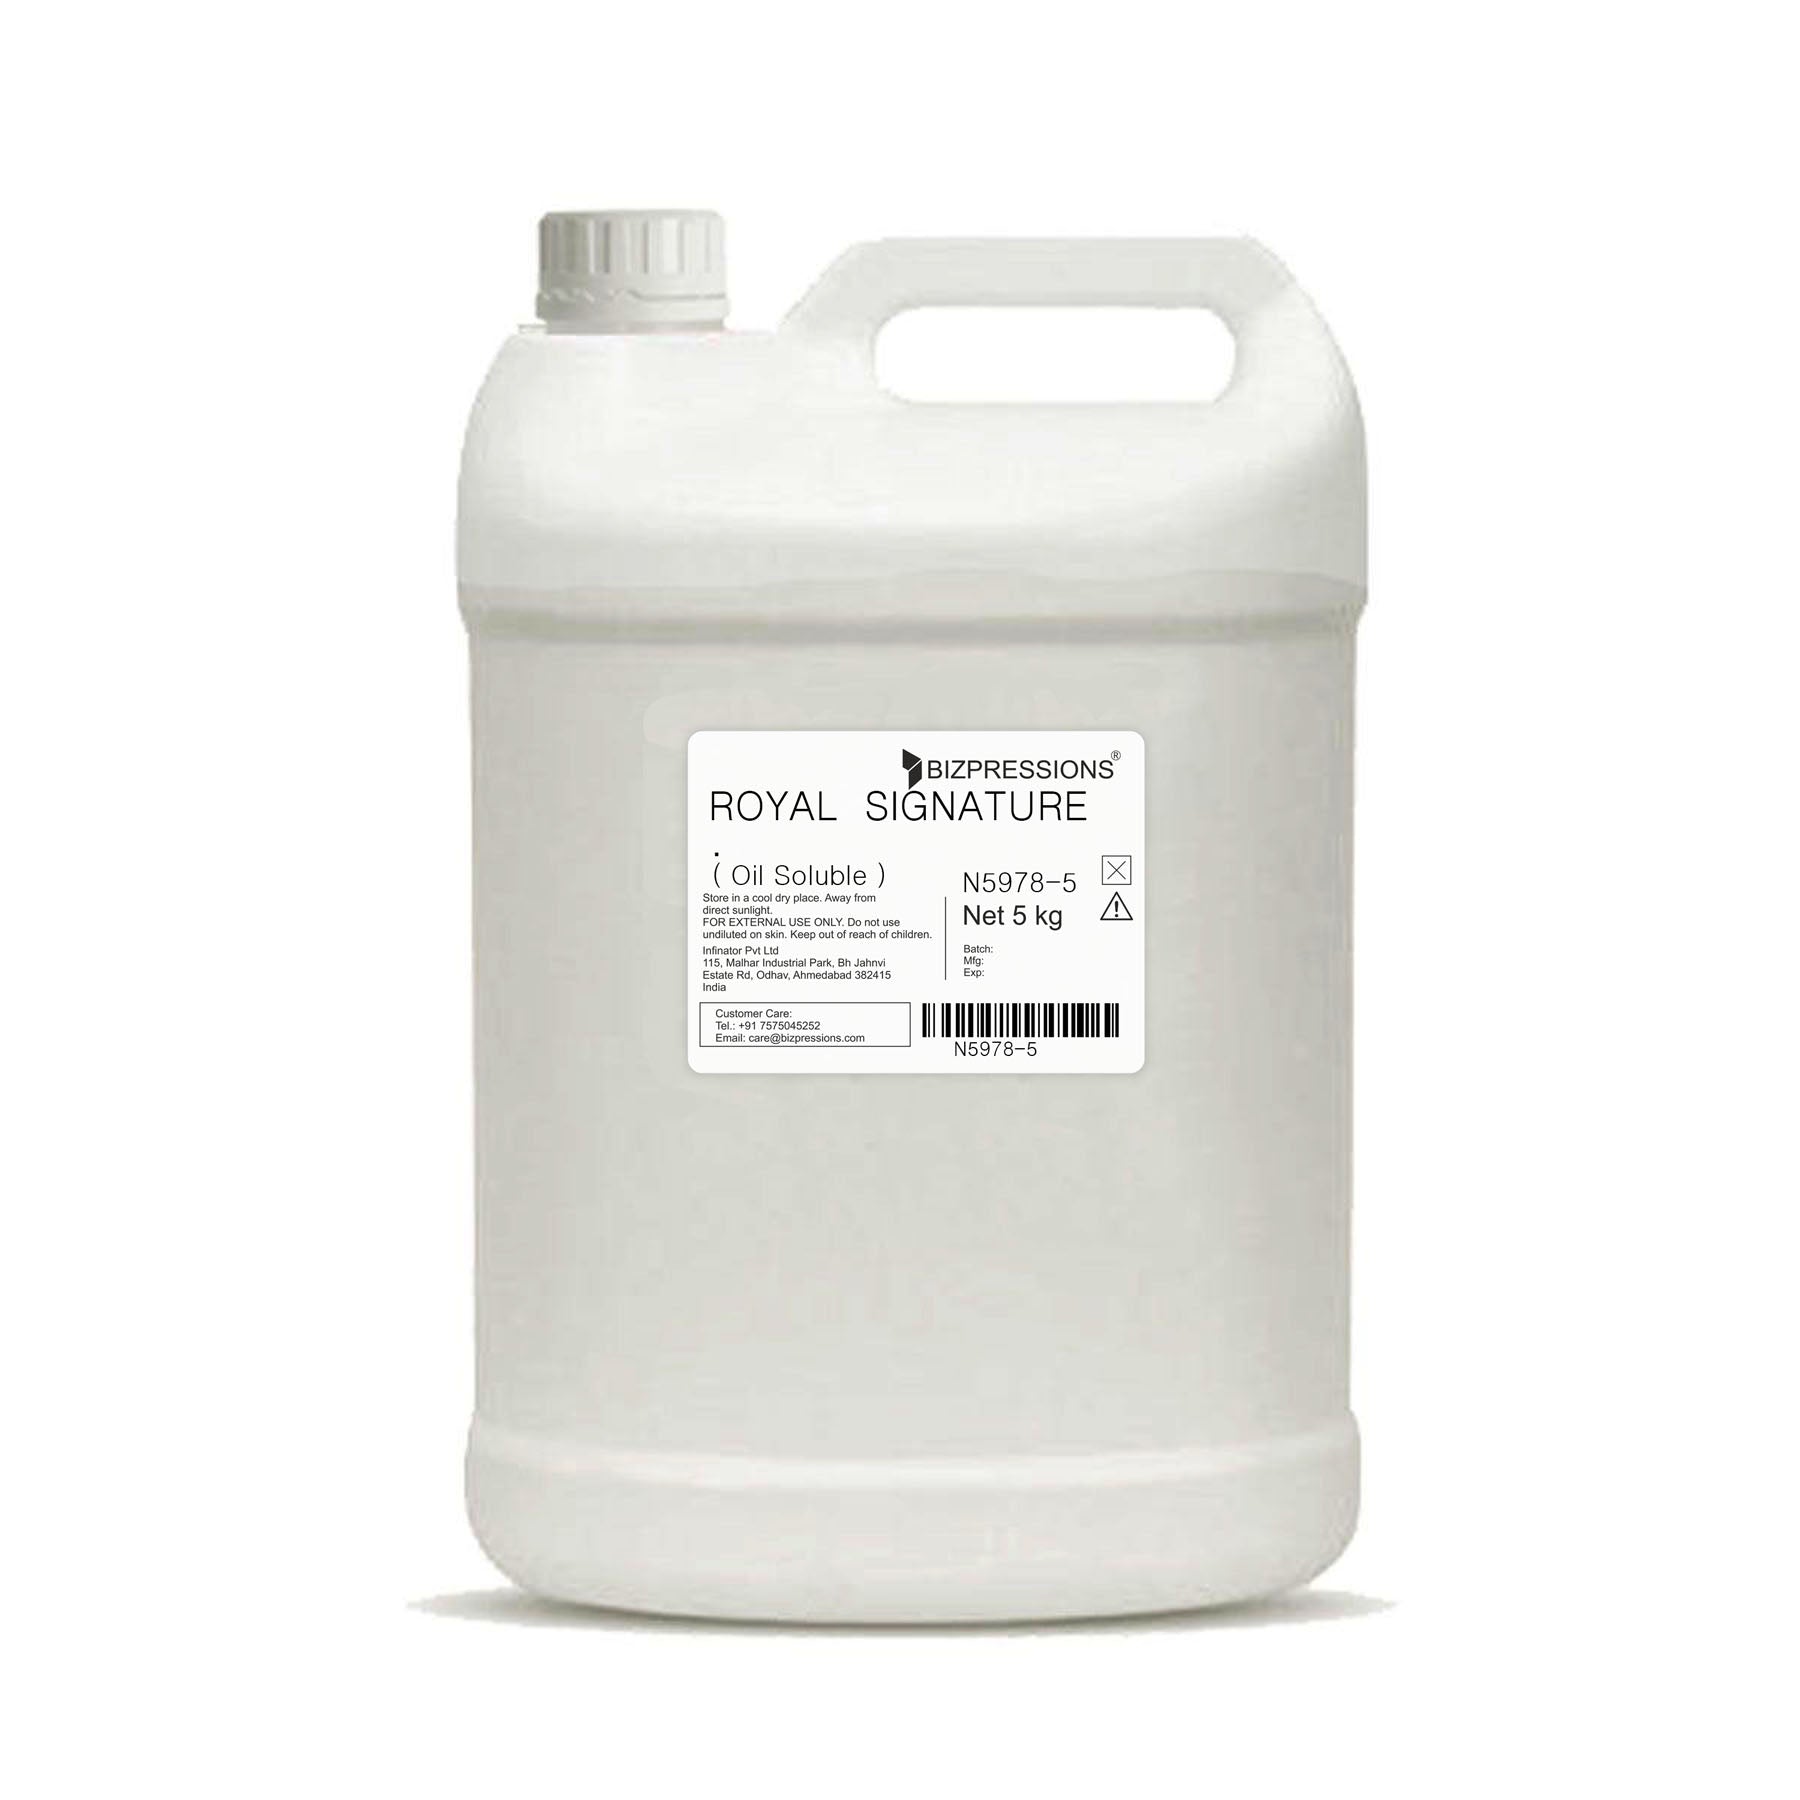 ROYAL SIGNATURE - Fragrance ( Oil Soluble ) - 5 kg